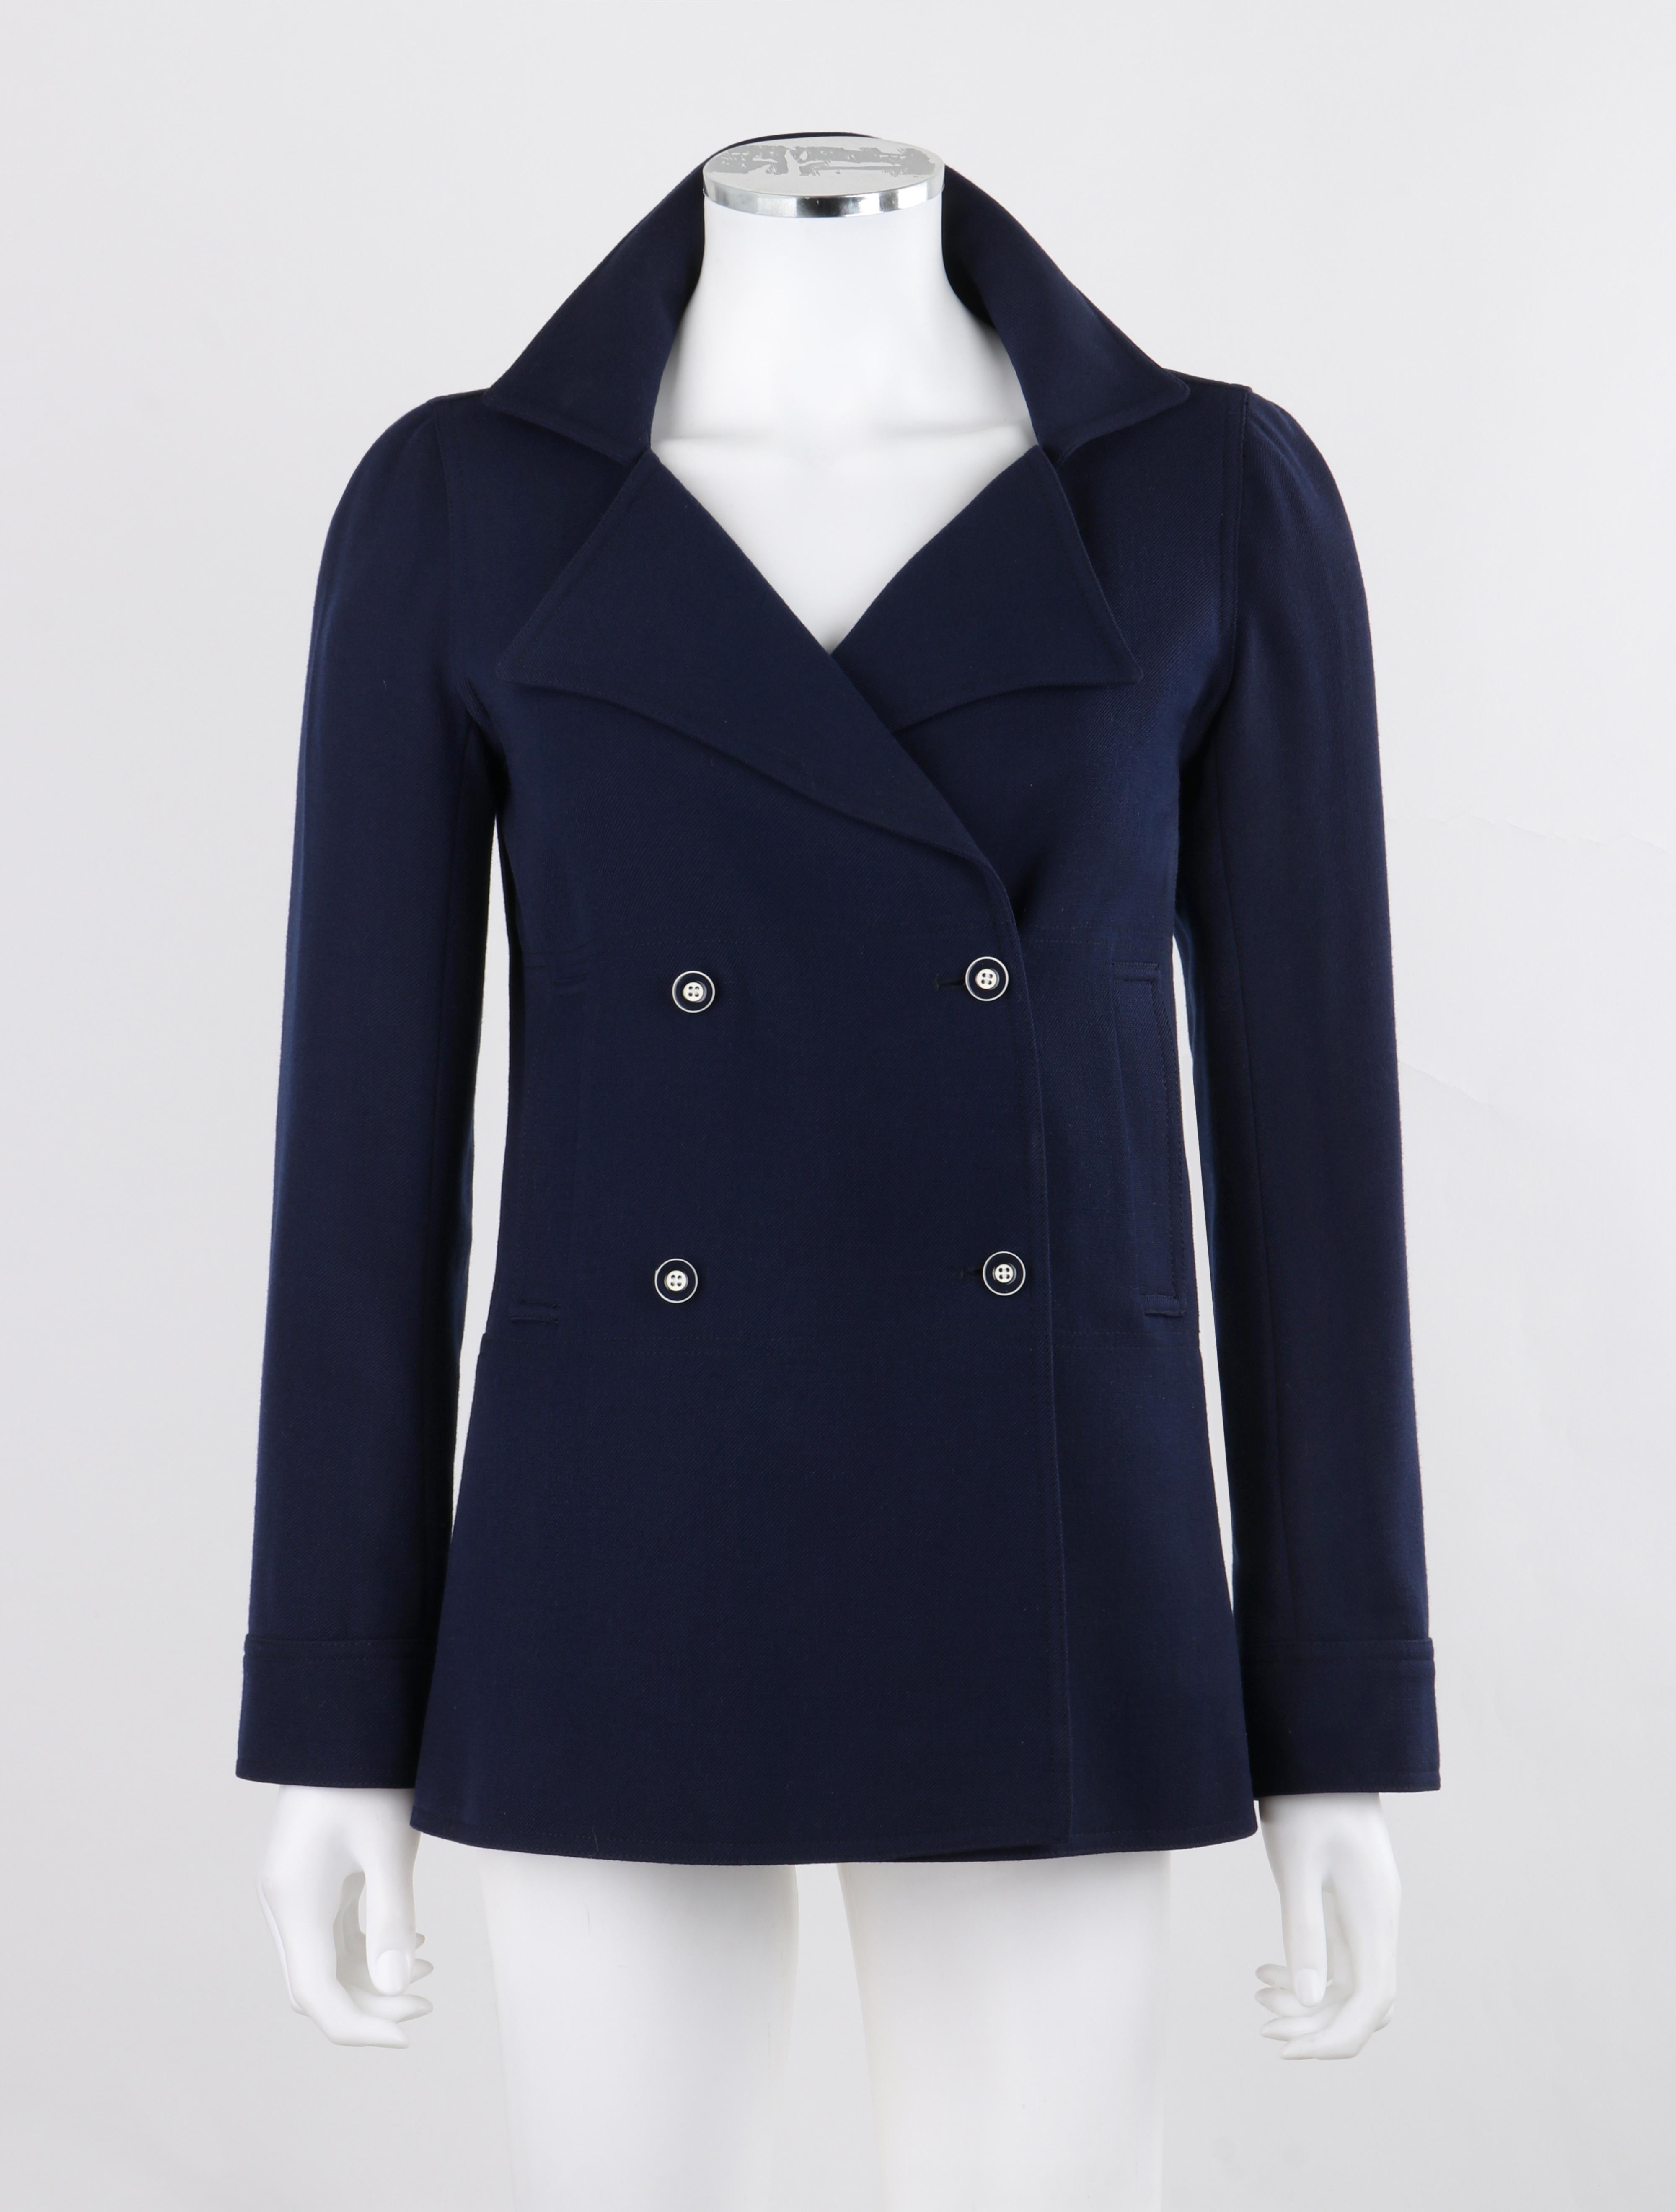 COURREGES PARIS c.1970's Vtg Navy Blue Wool Double Breasted Blazer Jacket

Brand / Manufacturer: Courreges
Circa: 1970's
Designer: Andre Courreges
Style: Double Breasted Blazer
Color(s): Navy Blue
Lined: Yes
Marked Fabric: 